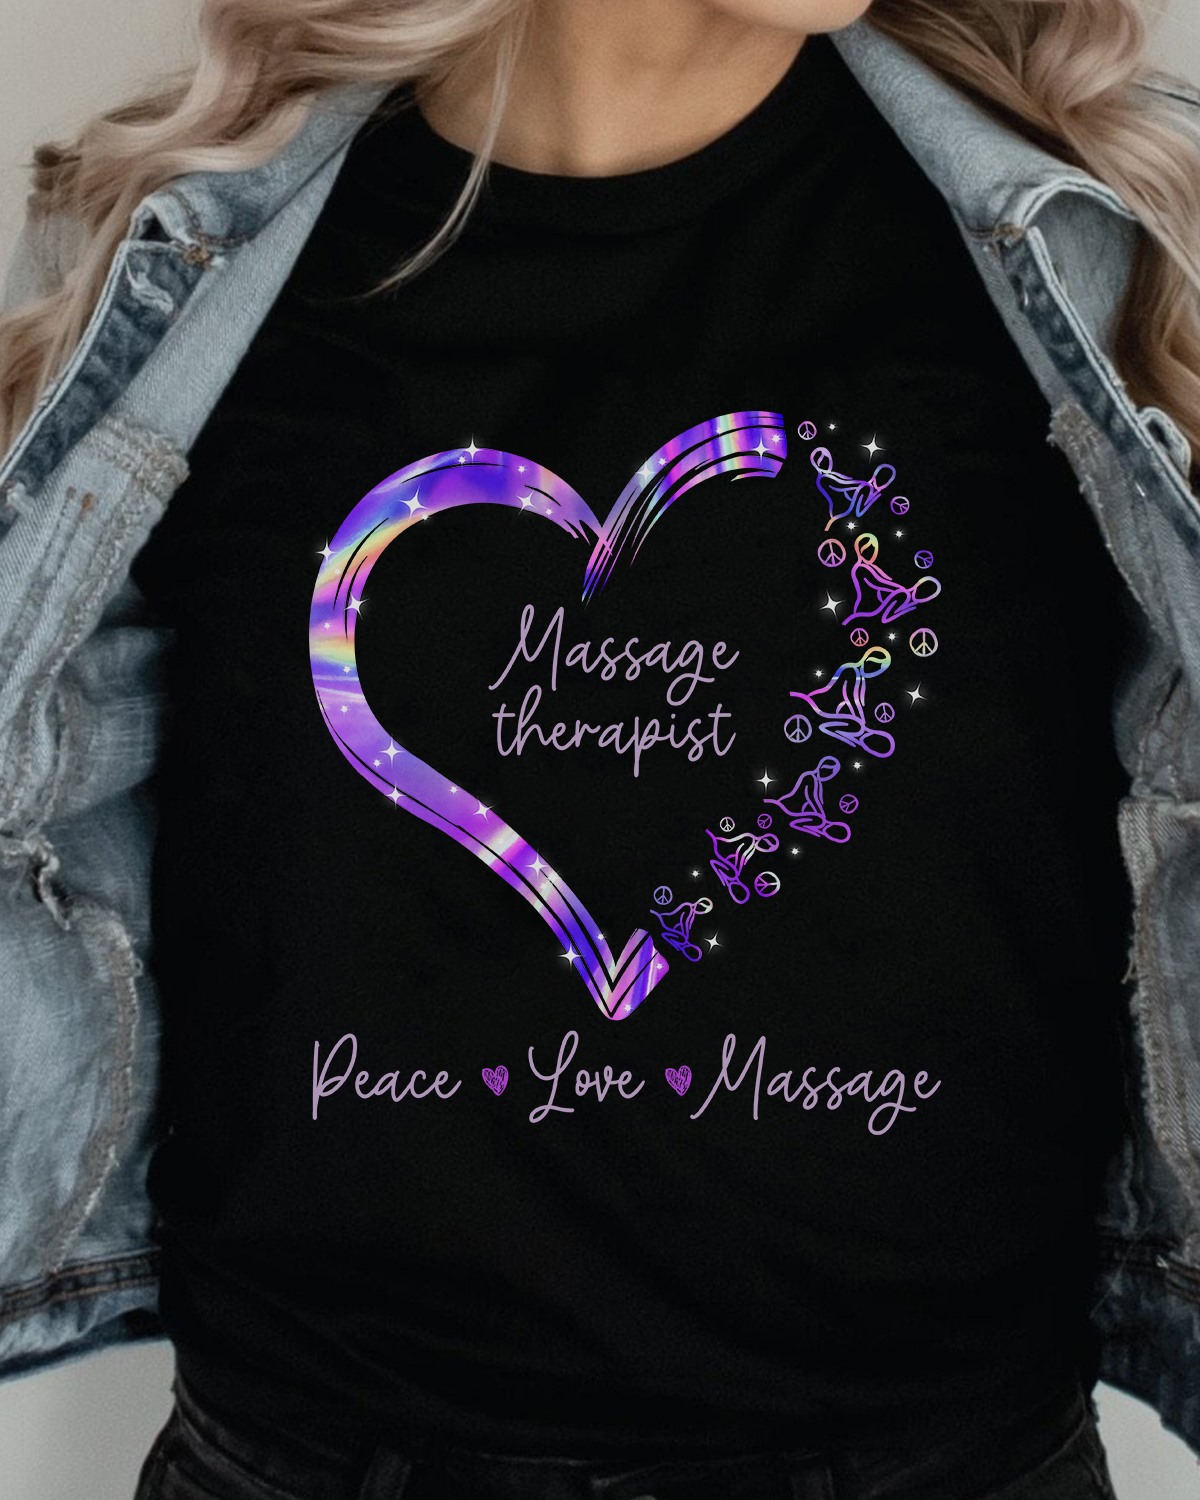 Massage therapist - Peace, love, massage